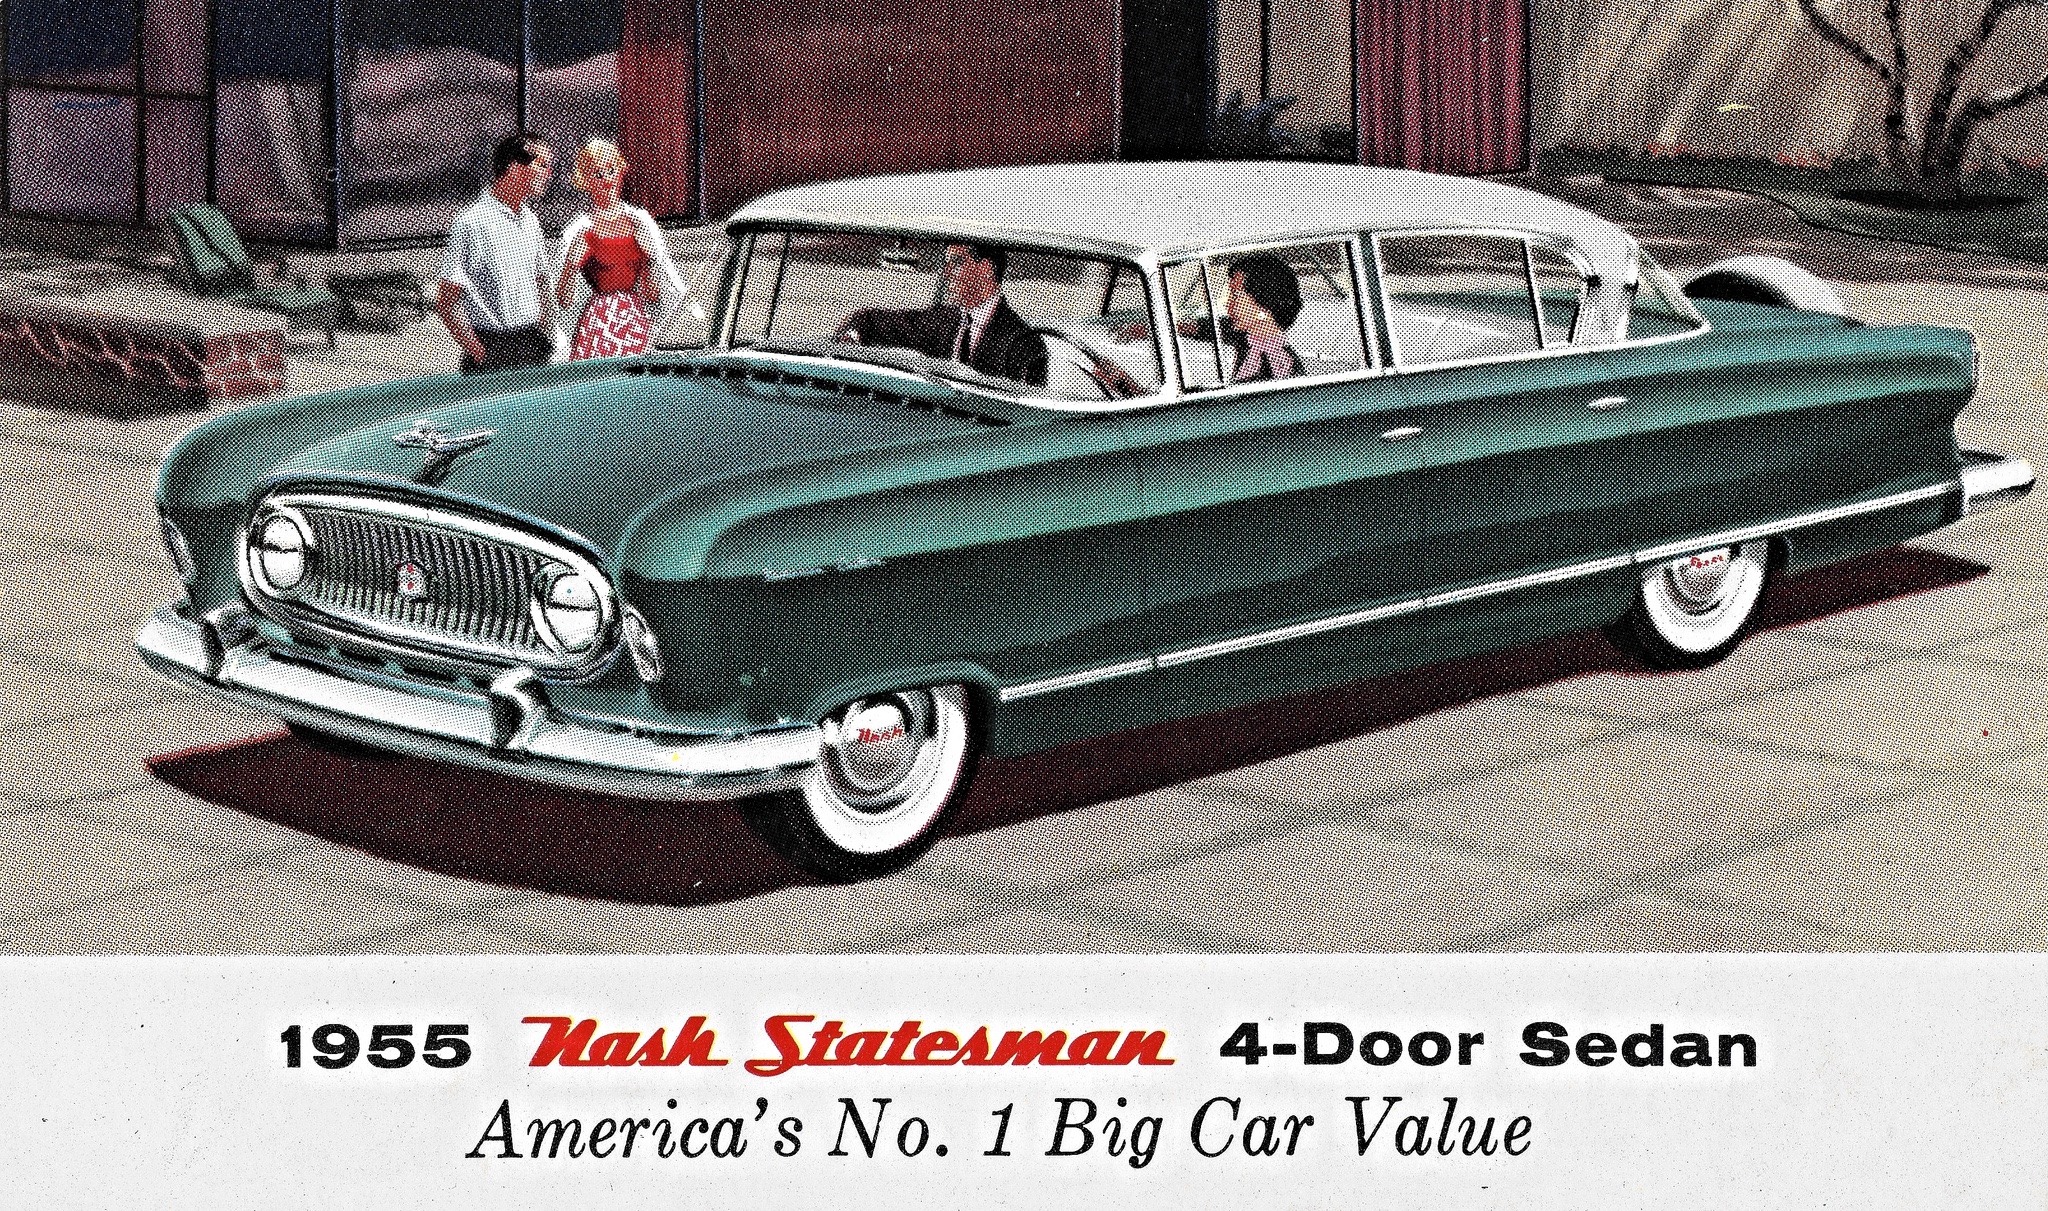 1955 Nash Statesman 4-Door Sedan